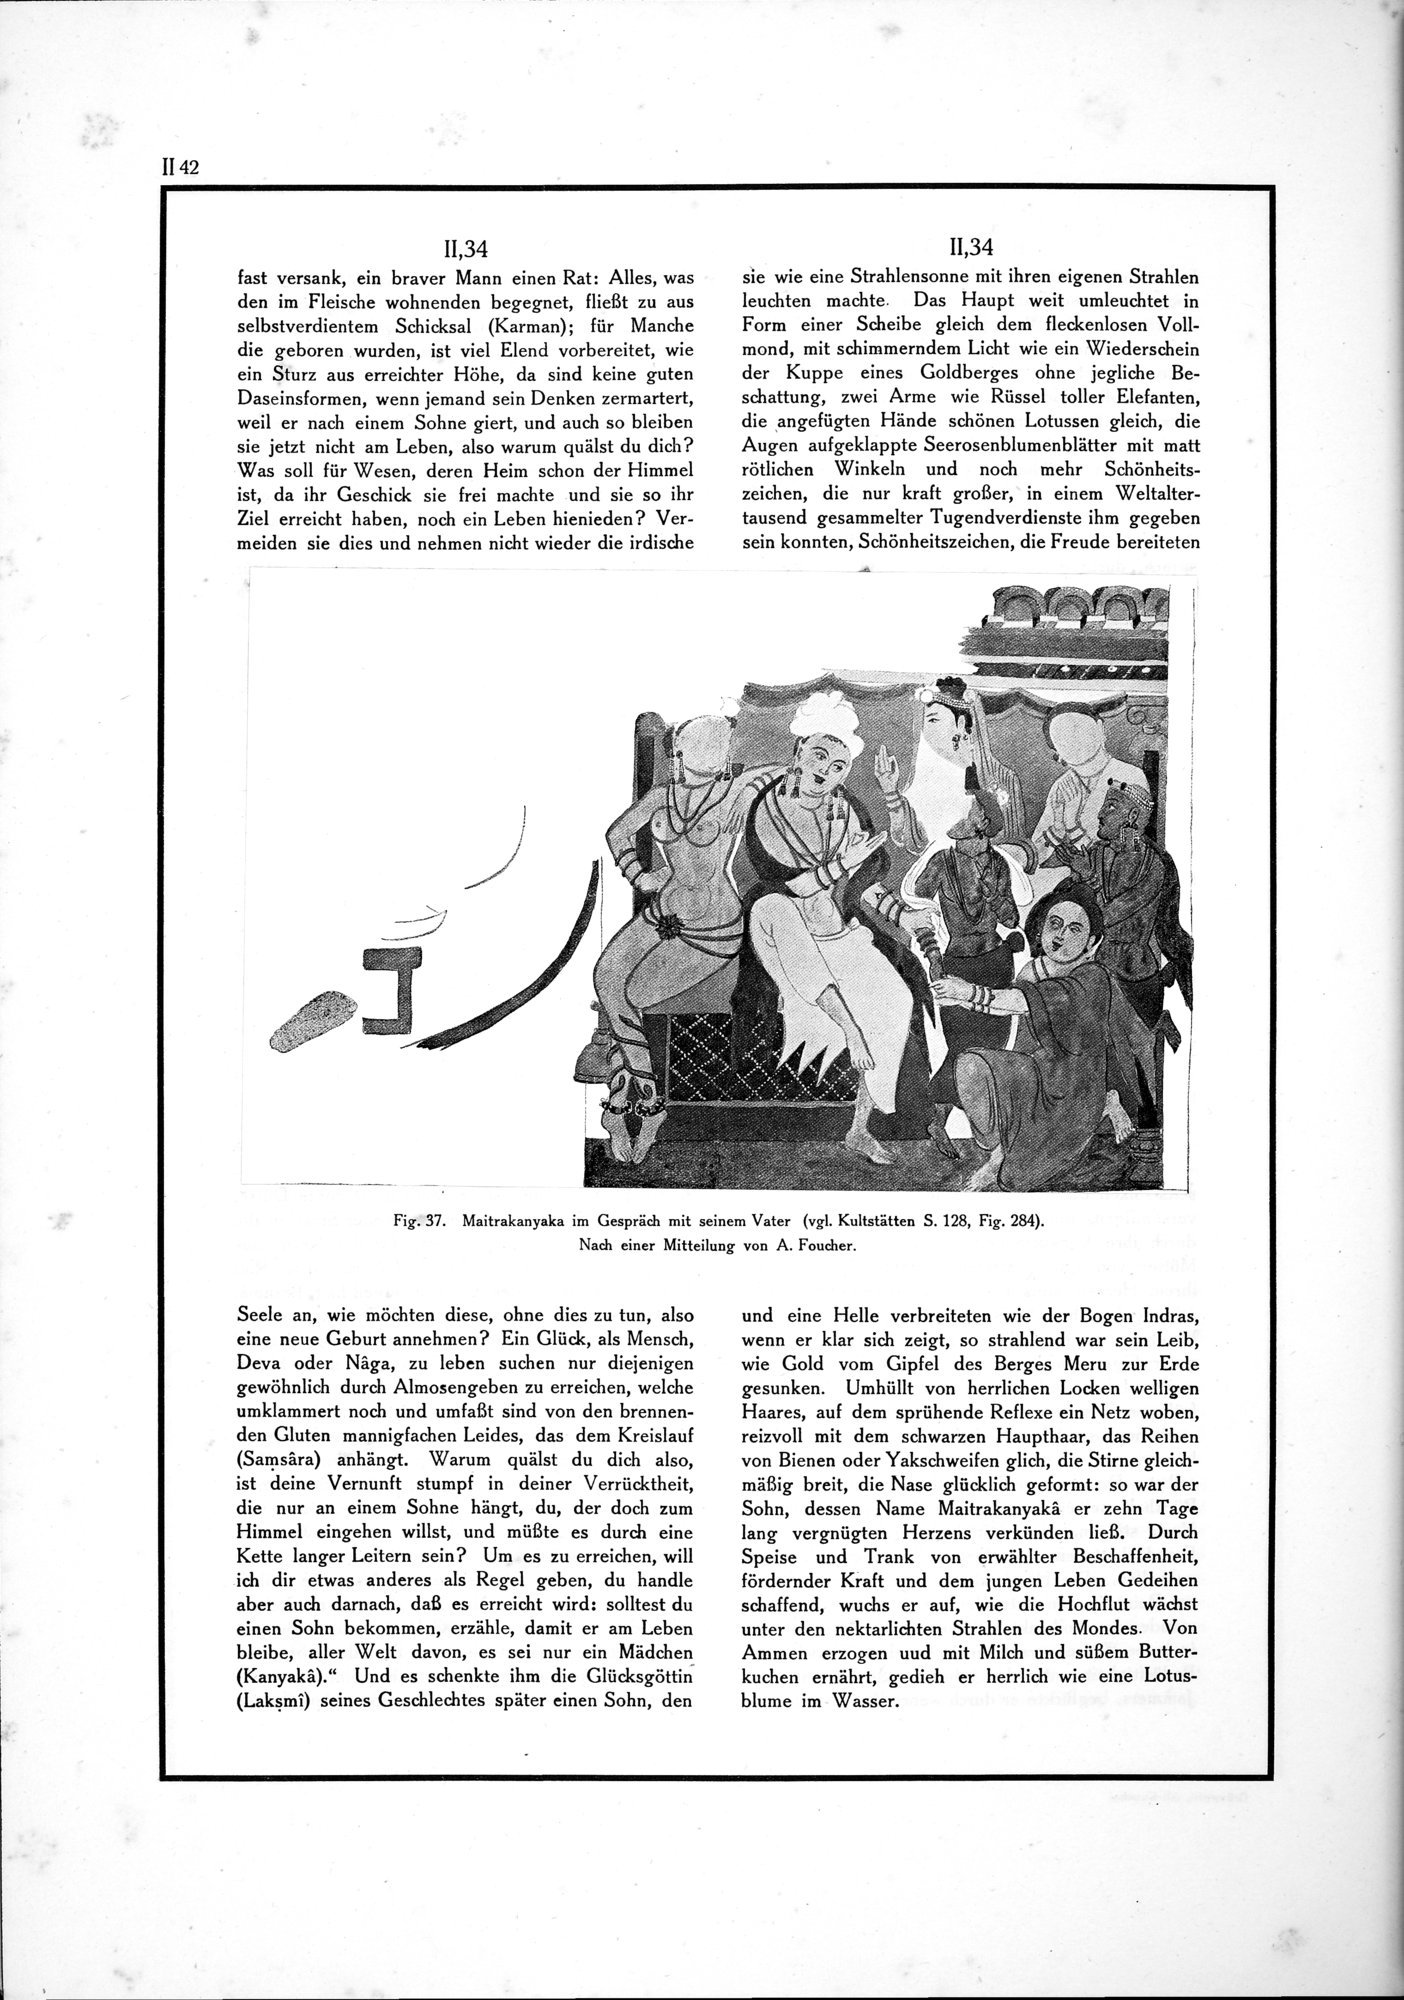 Alt-Kutscha : vol.1 / Page 148 (Grayscale High Resolution Image)